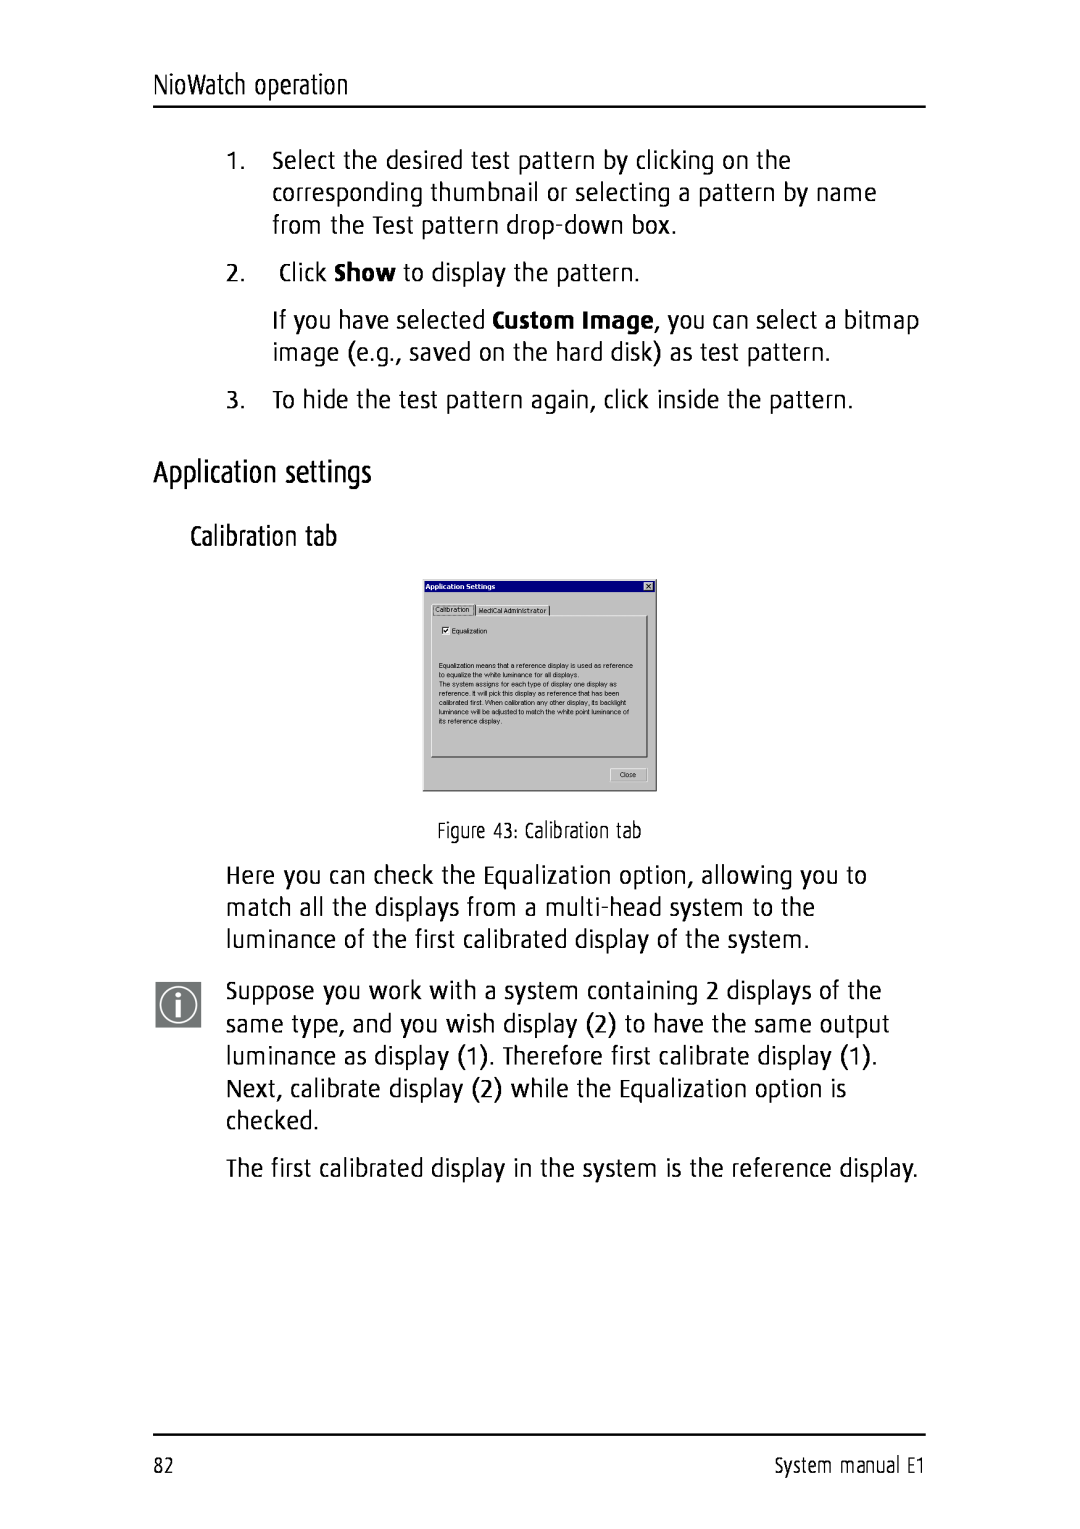 Barco E1 manual Application settings, NioWatch operation, Calibration tab 